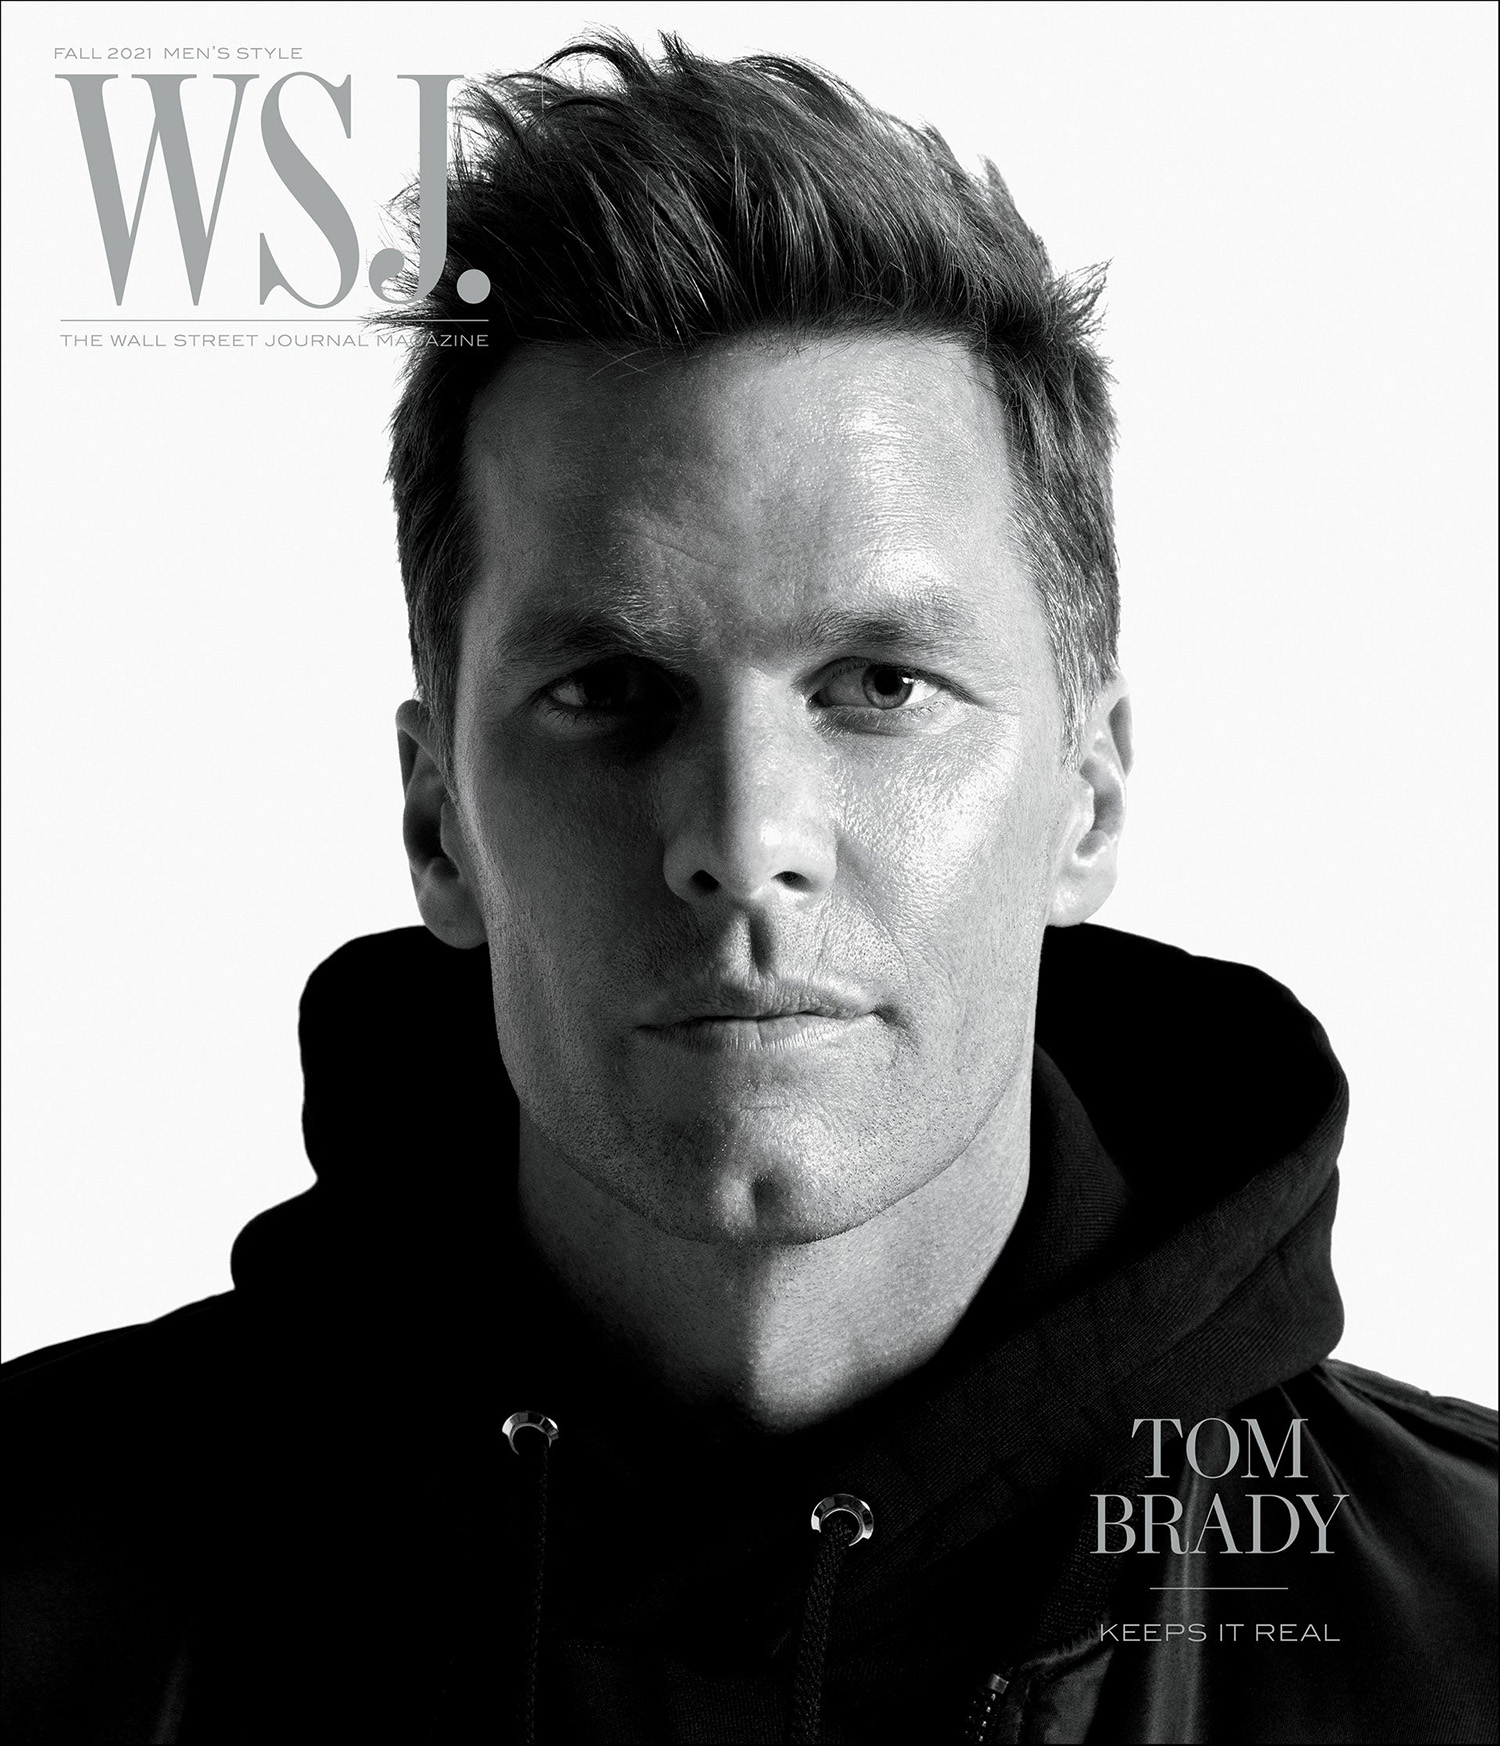 Tom Brady covers WSJ. Magazine Fall 2021 Men’s Style by Mario Sorrenti